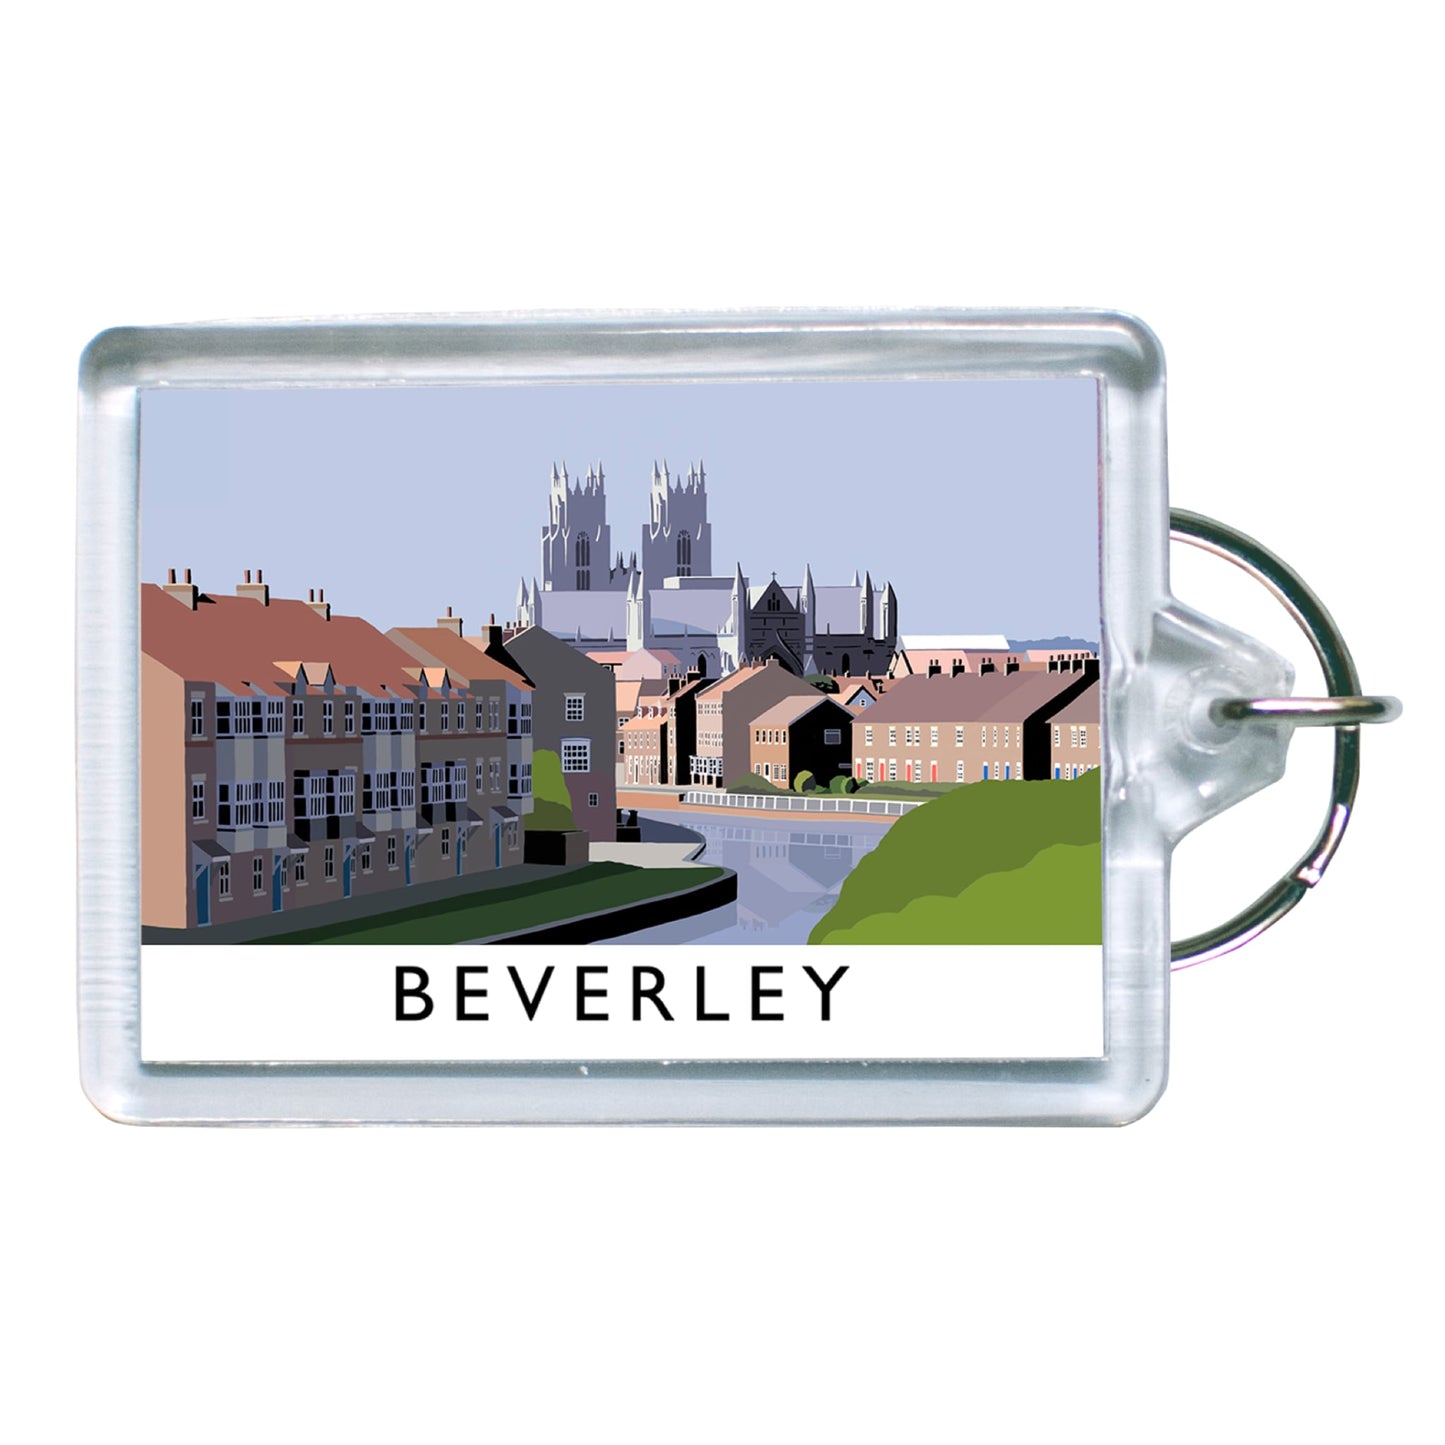 Beverley Keyring - The Great Yorkshire Shop